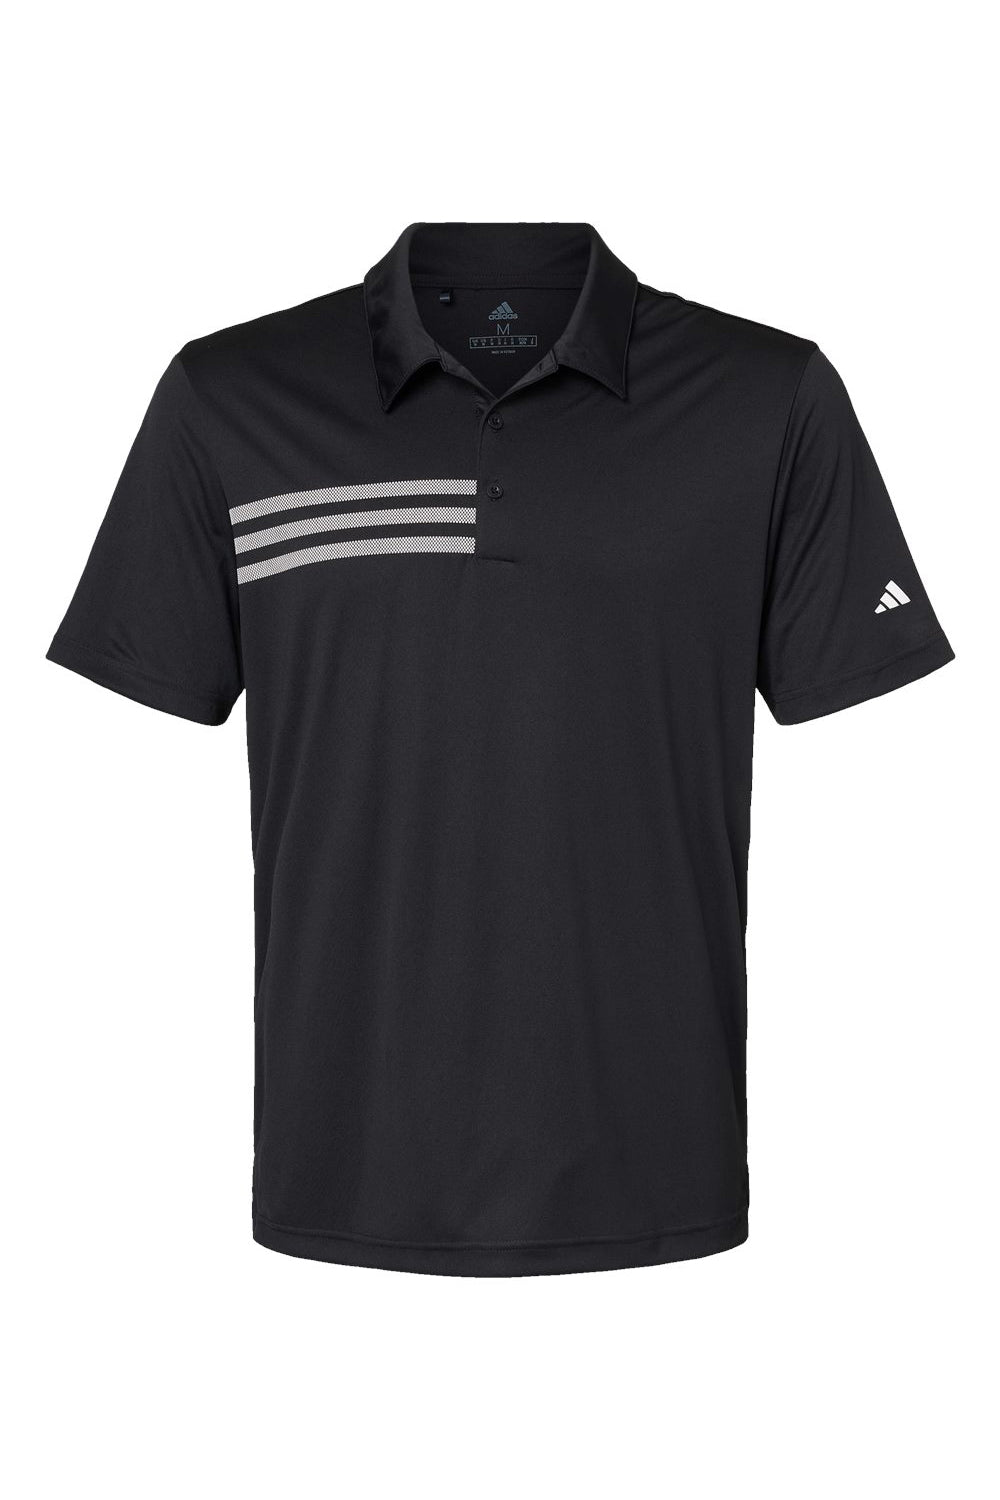 Adidas A324 Mens 3 Stripes UPF 50+ Short Sleeve Polo Shirt Black Flat Front